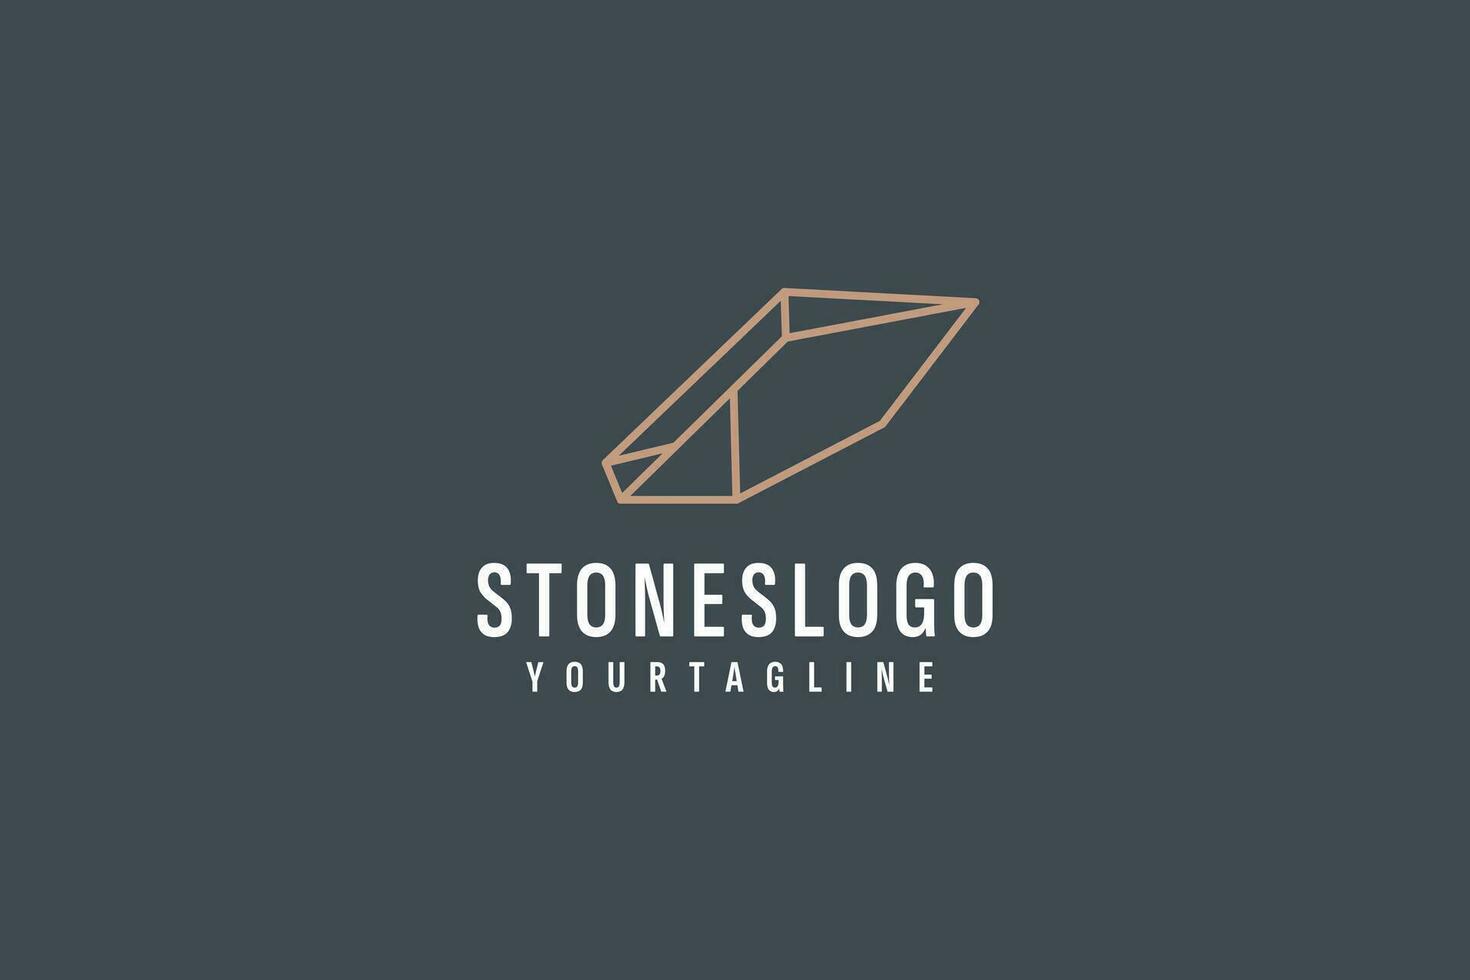 Stone logo vector icon illustration